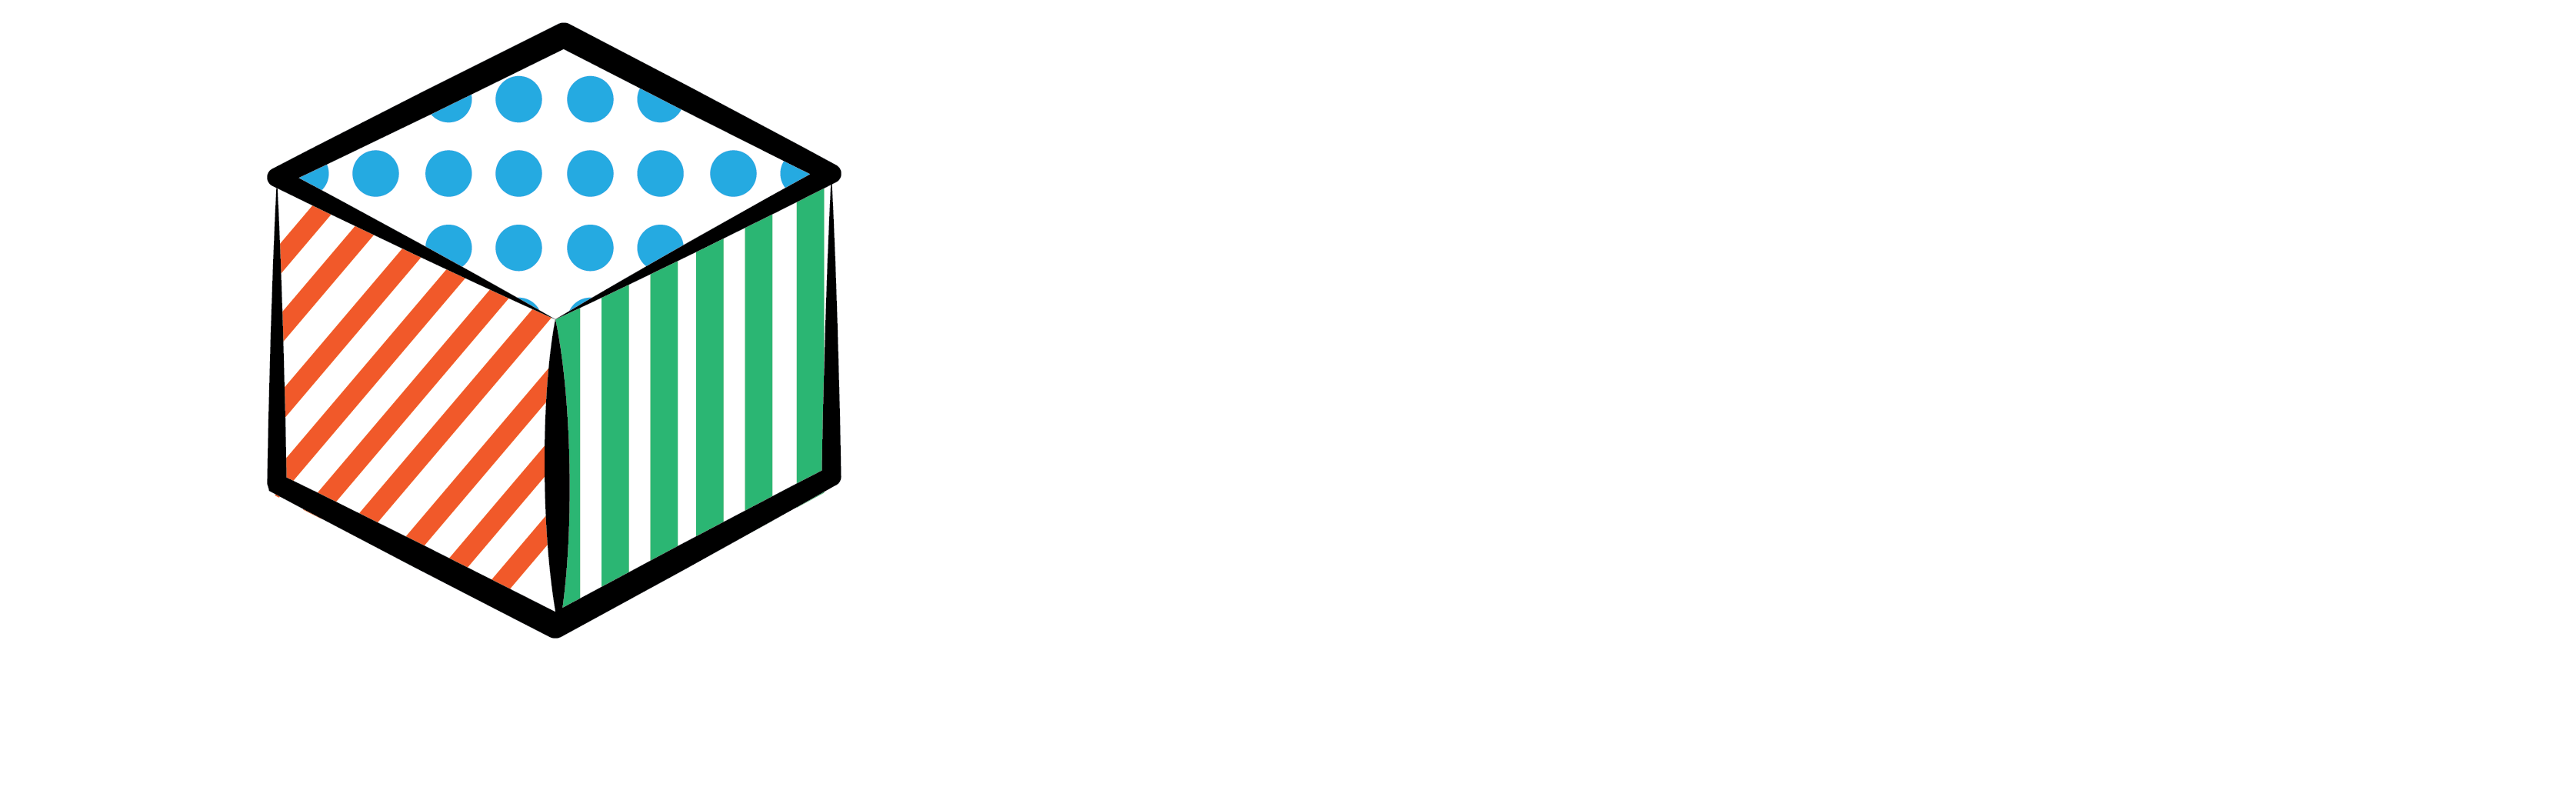 Pandora Butik İkram - Graphic Design (3508x2480)